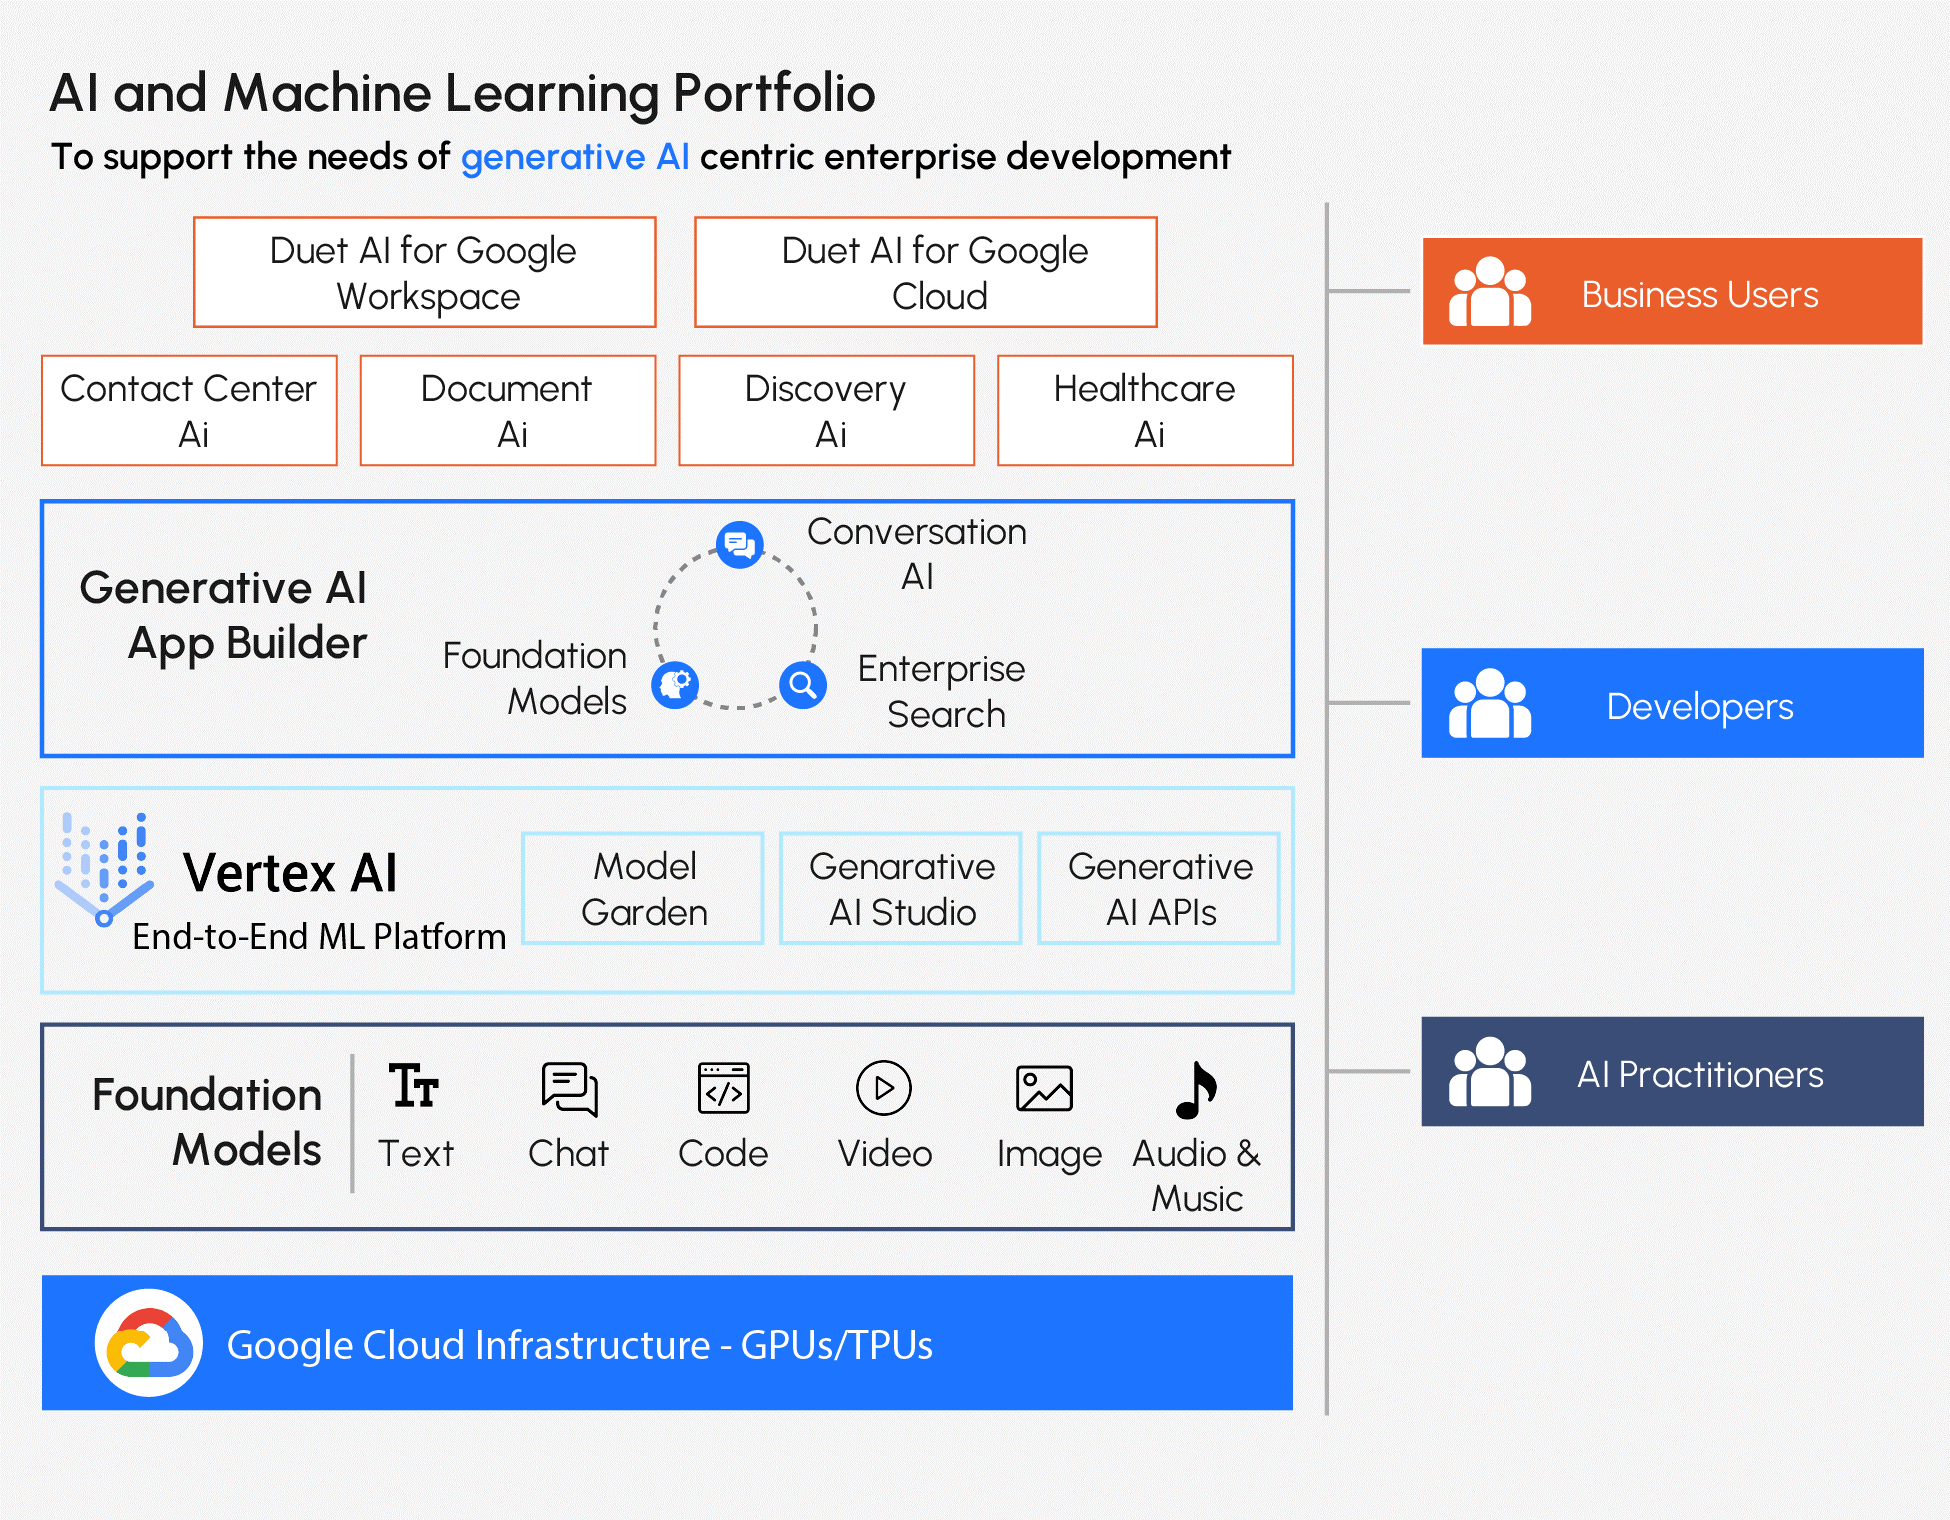 Figure 1. Google’s AI and Machine Learning Portfolio.